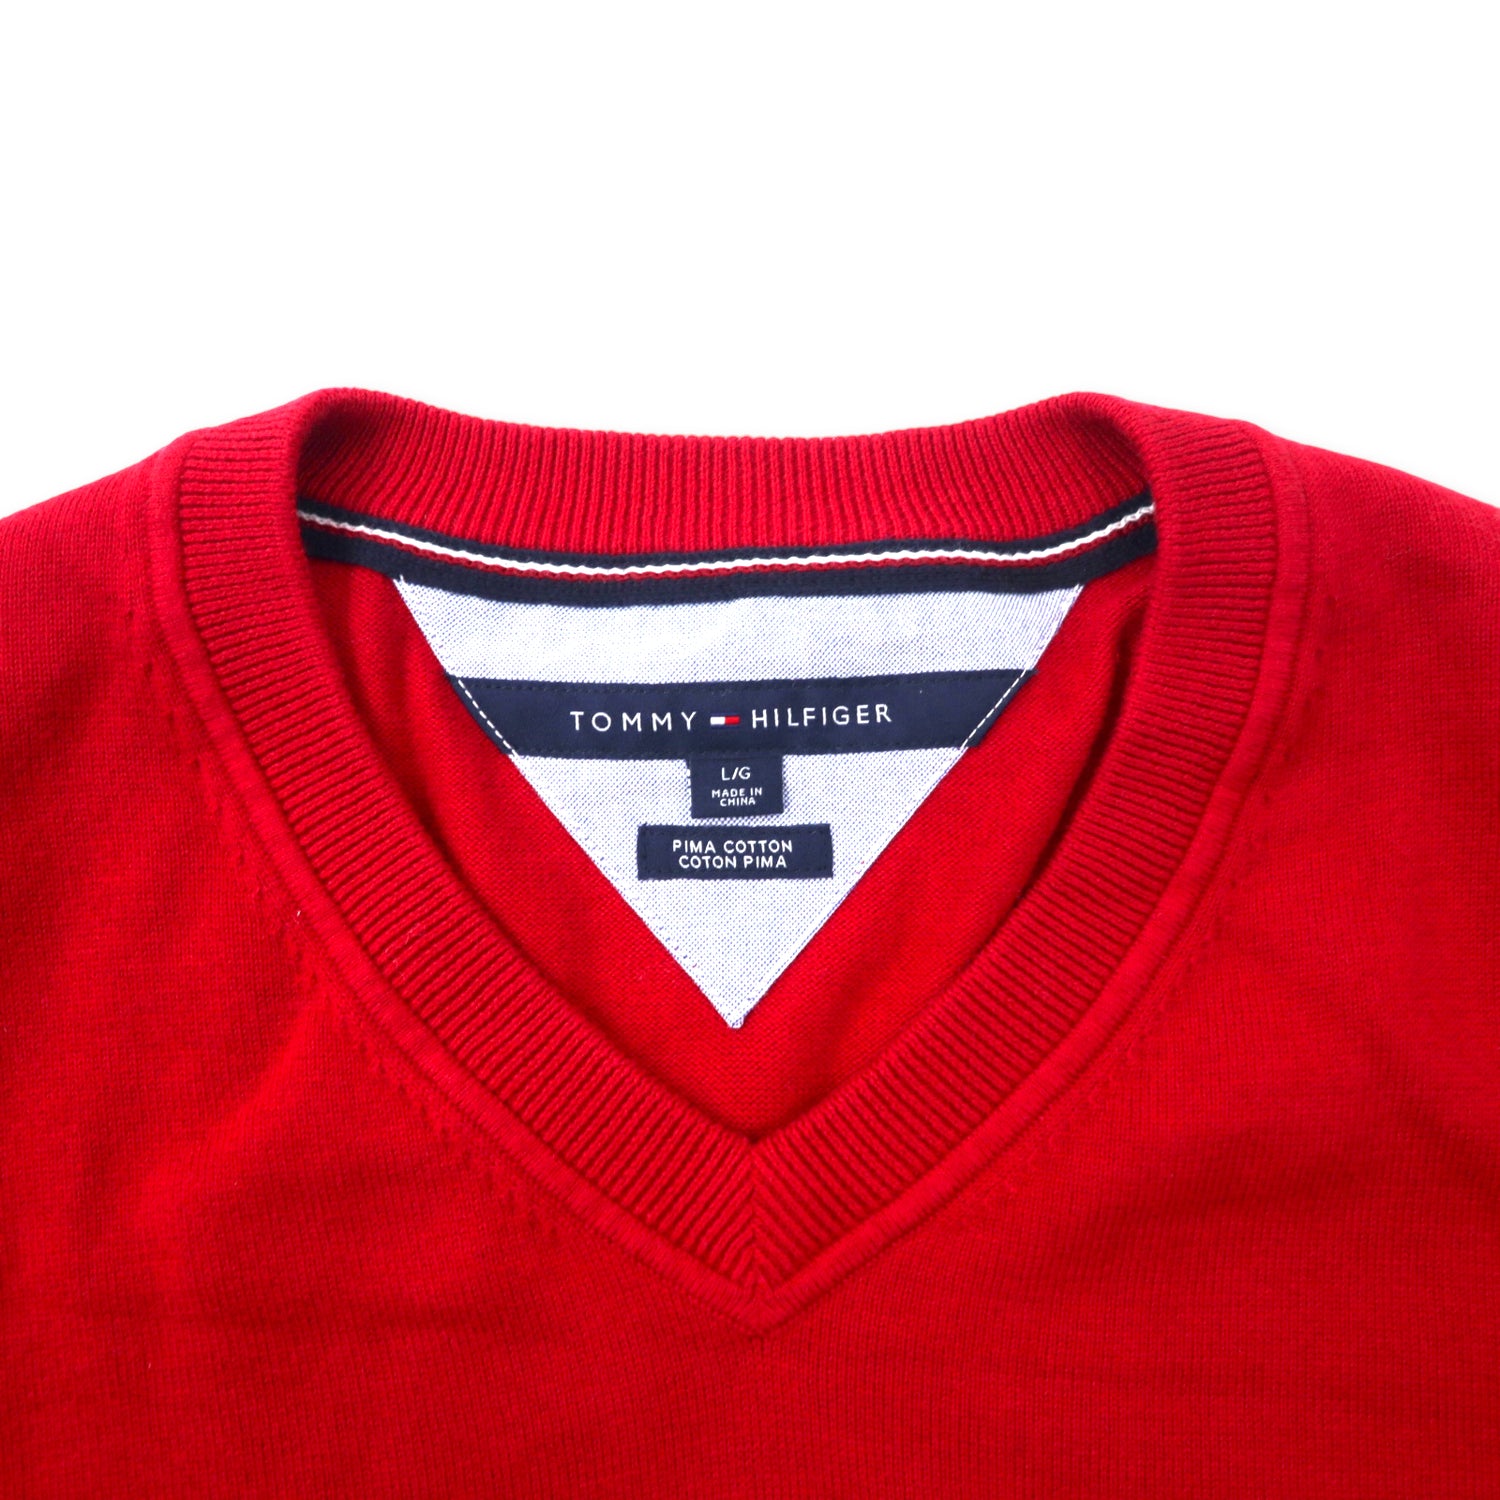 TOMMY HILFIGER V neck knit sweater L Red Pima Cotton One Point